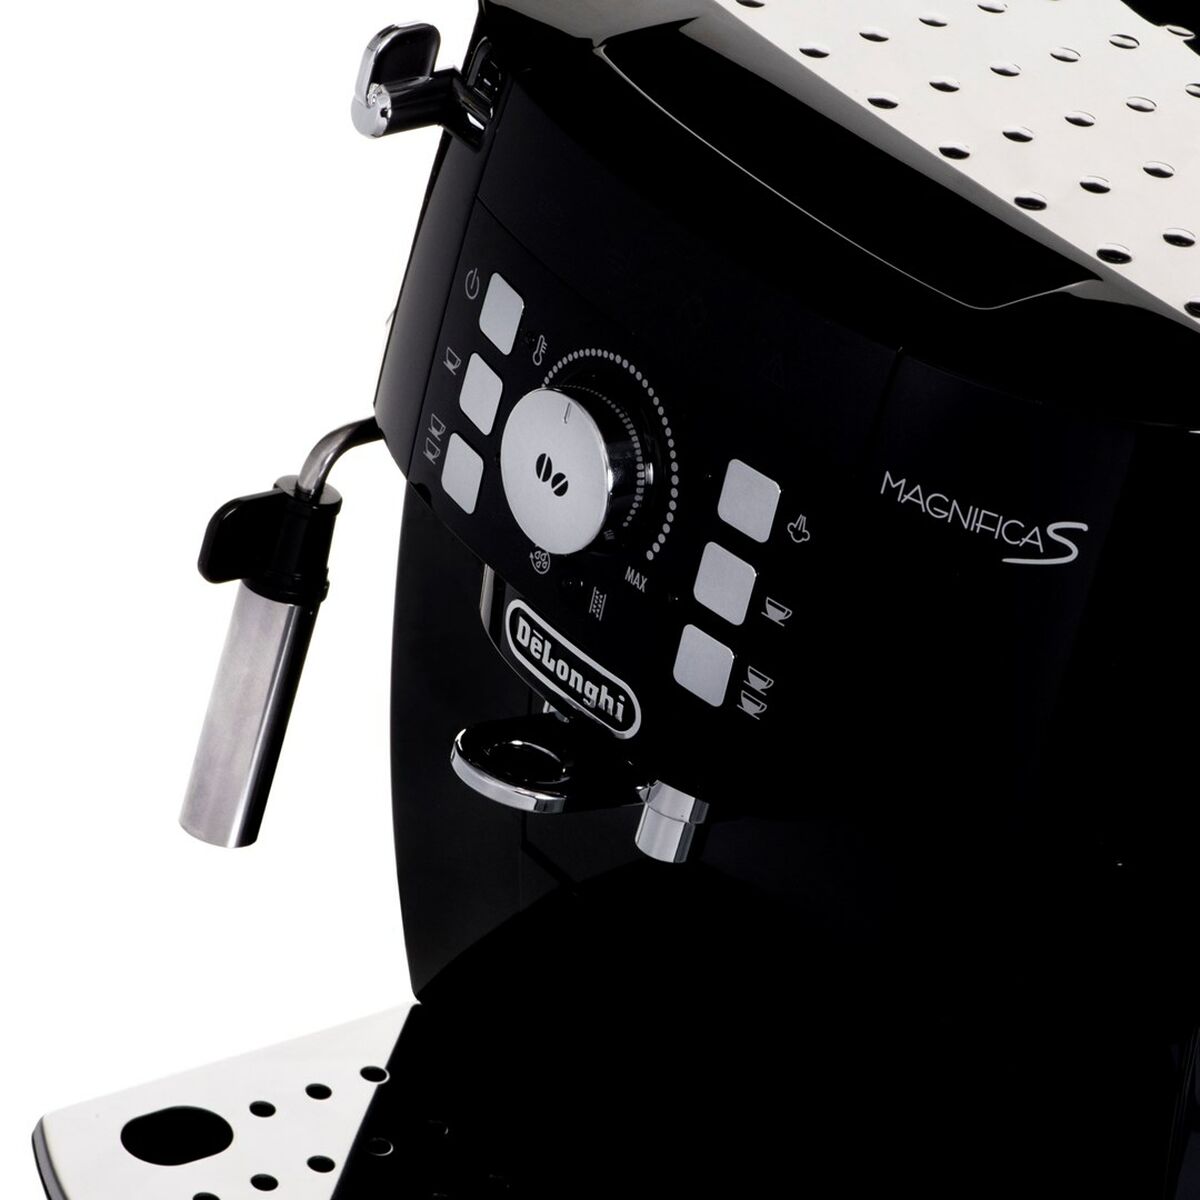 Superautomatische Kaffeemaschine DeLonghi Magnifica S ECAM Schwarz 1450 W 15 bar 1,8 L - CA International  